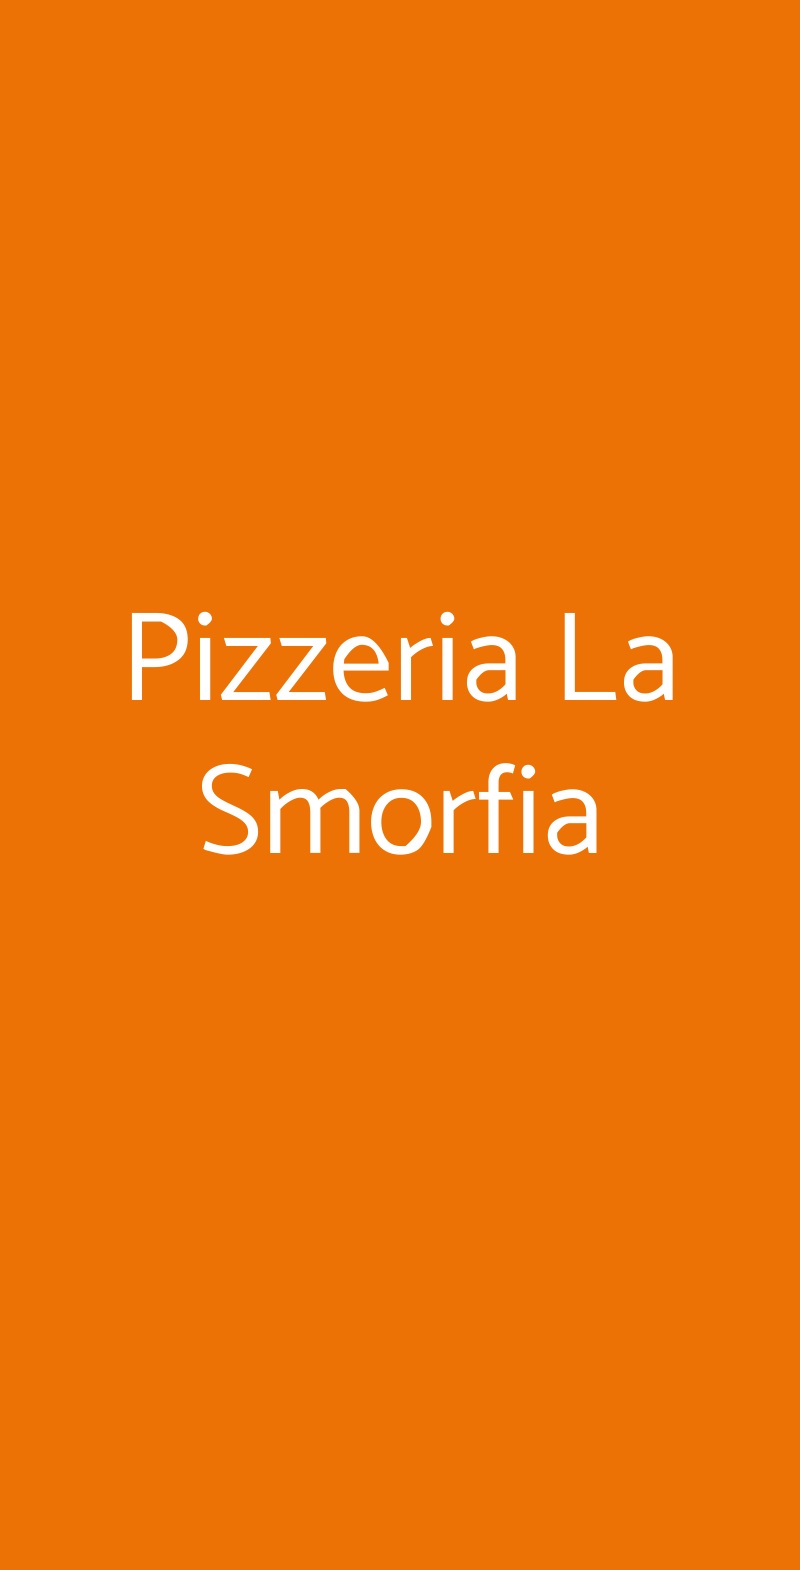 Pizzeria La Smorfia Milano menù 1 pagina